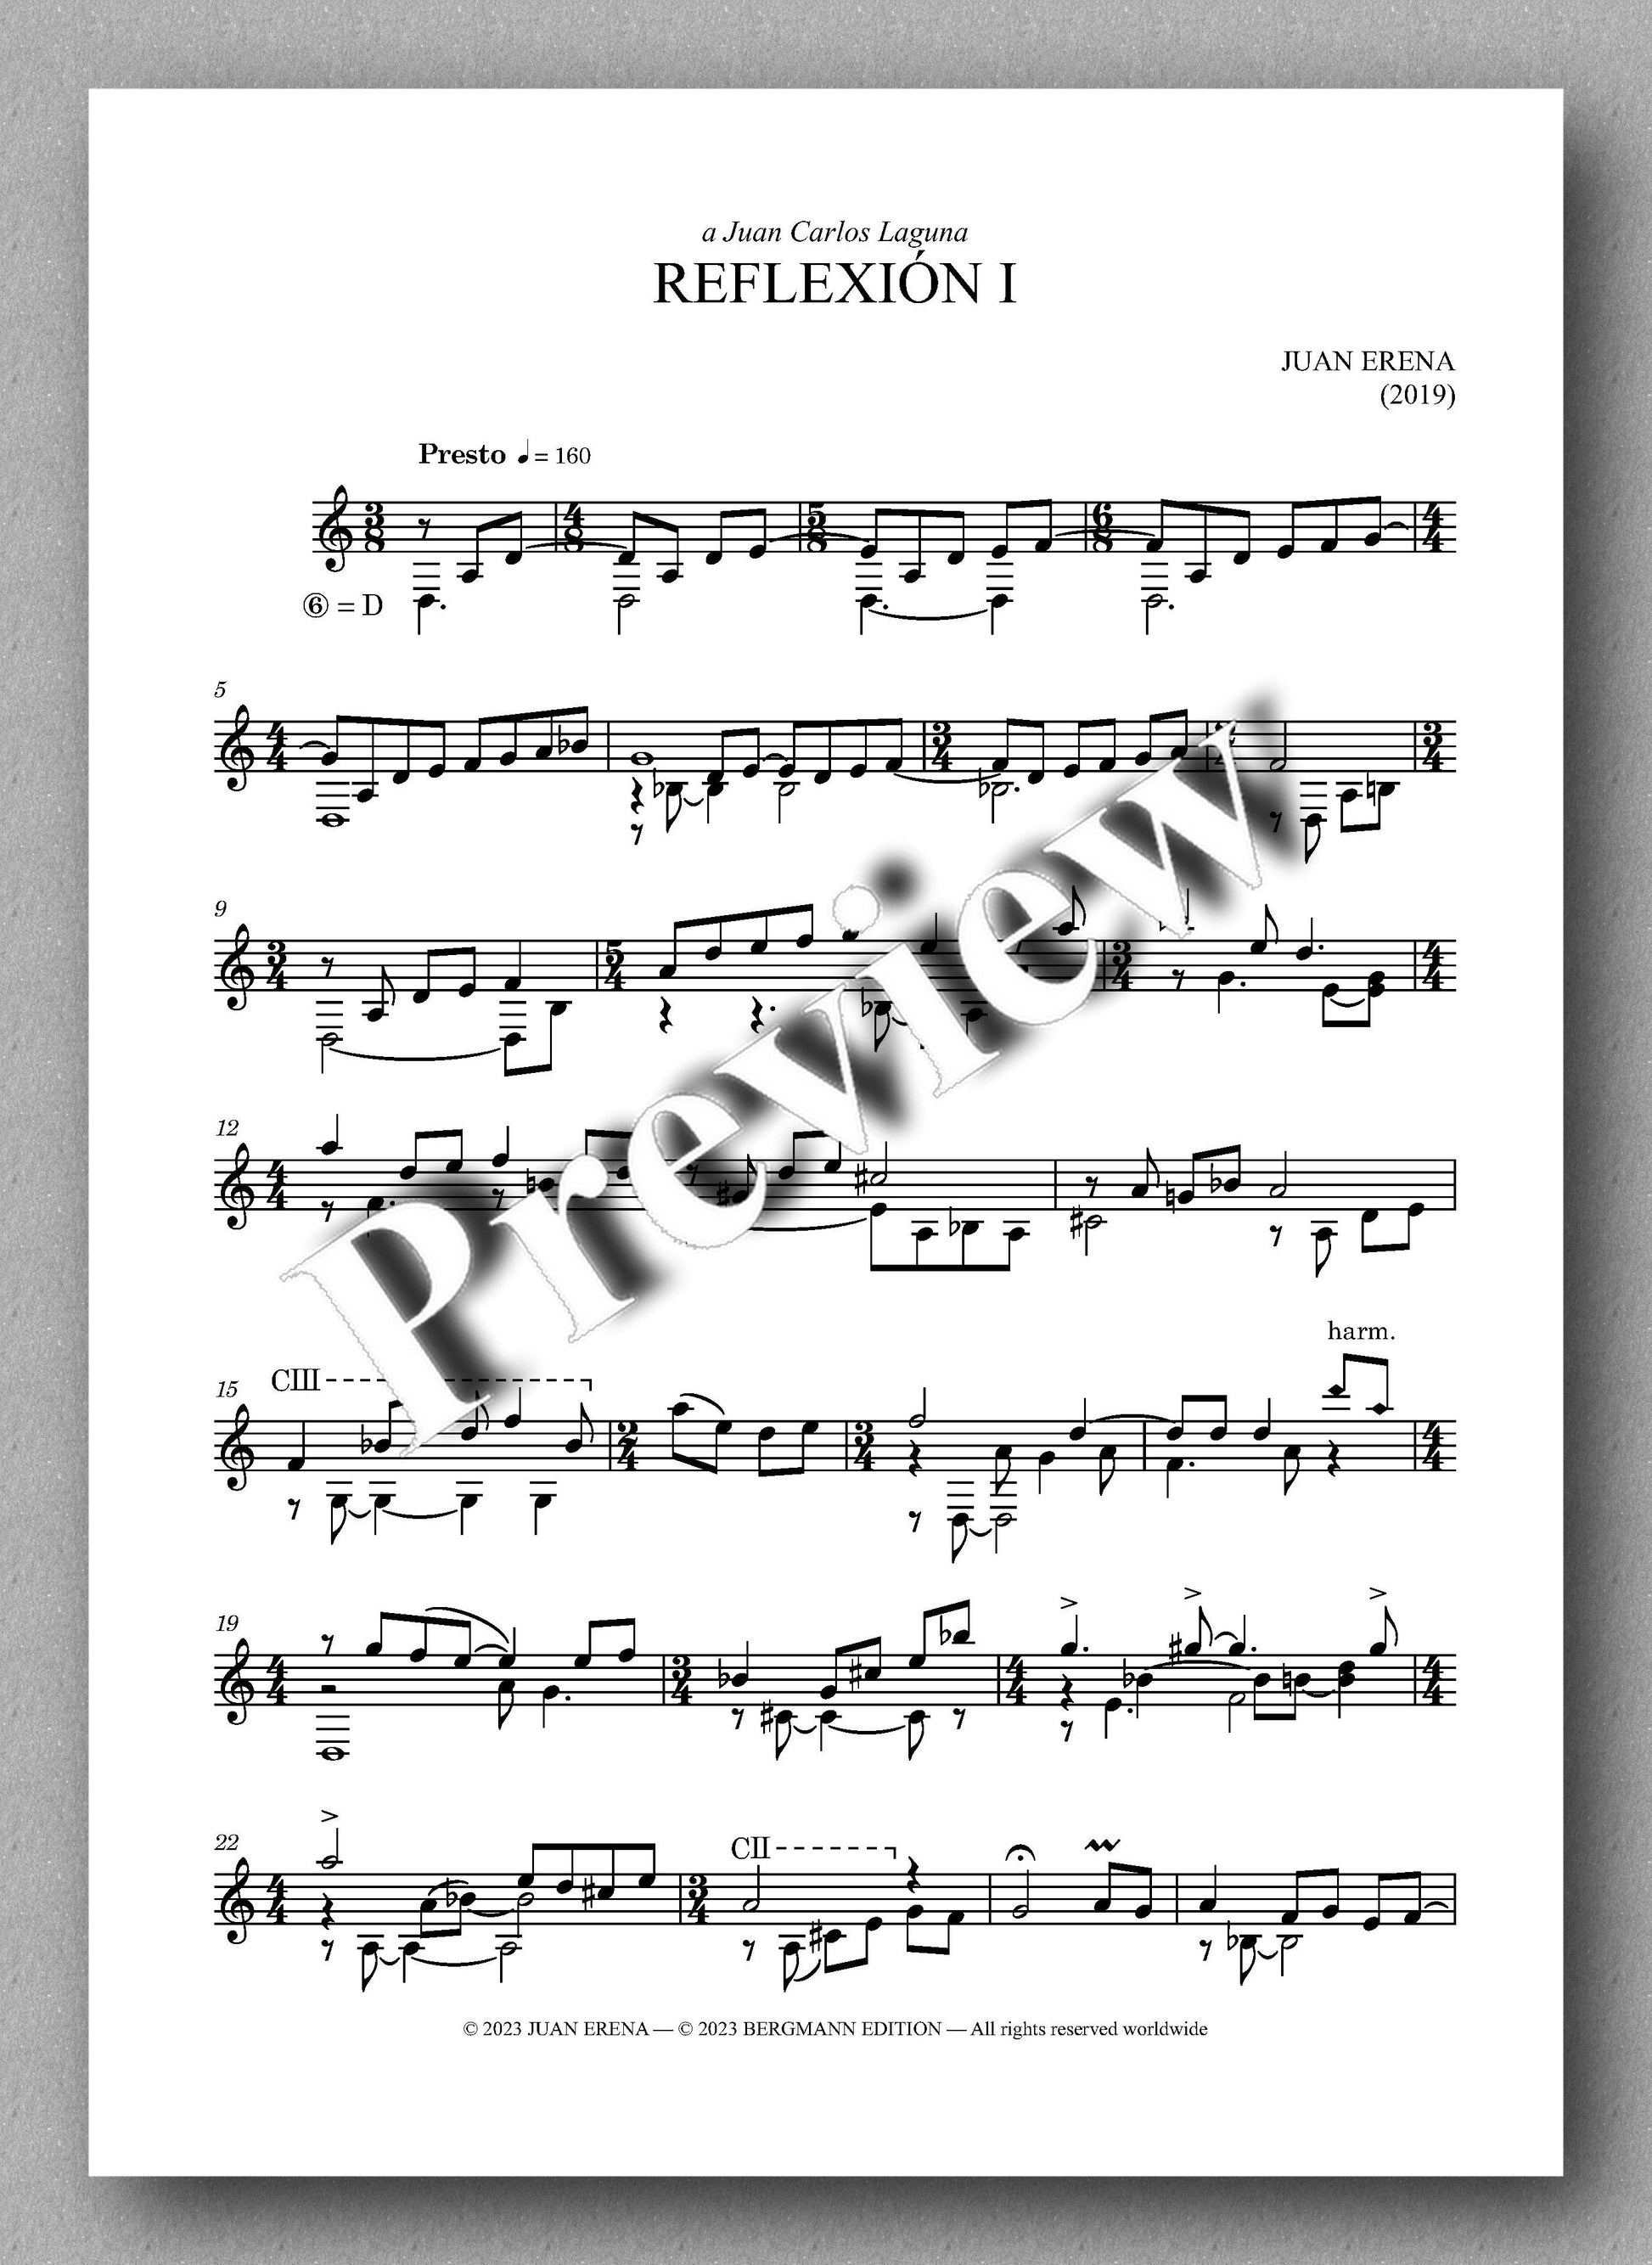 Juan Erena, DOS REFLEXIONES - preview of the music score 1